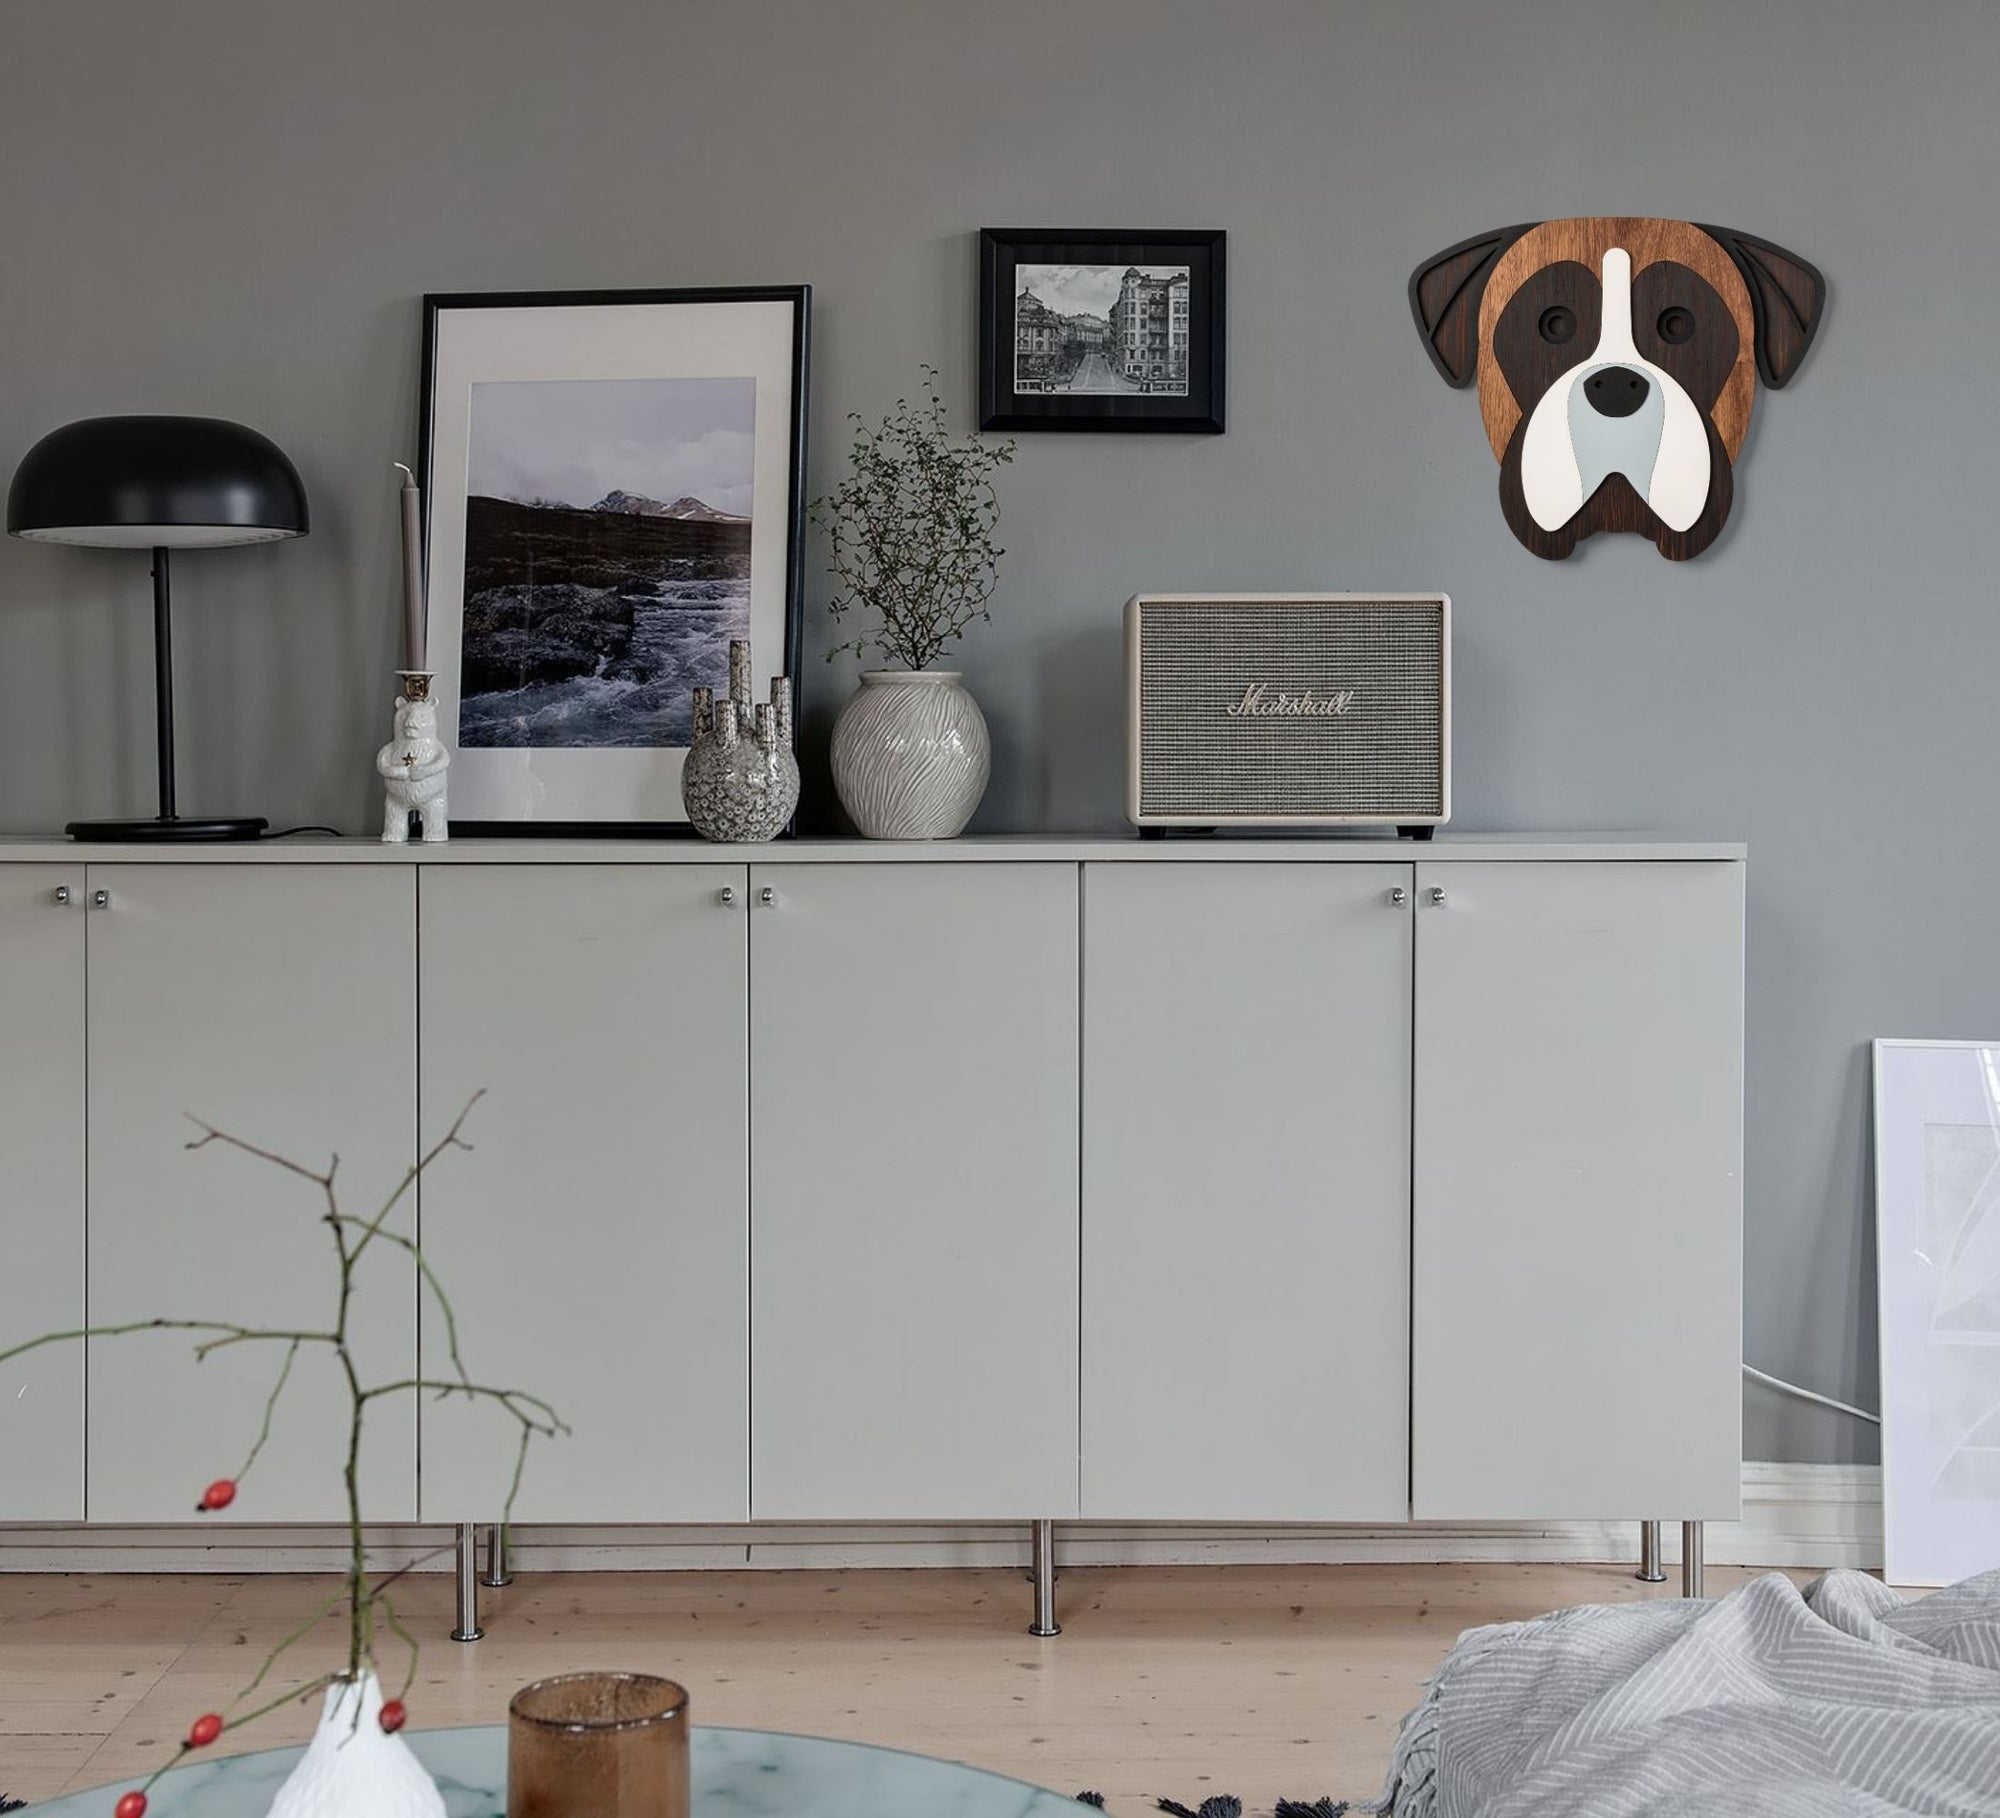 Both dog poster and wooden dog wall art enchants with its natural power